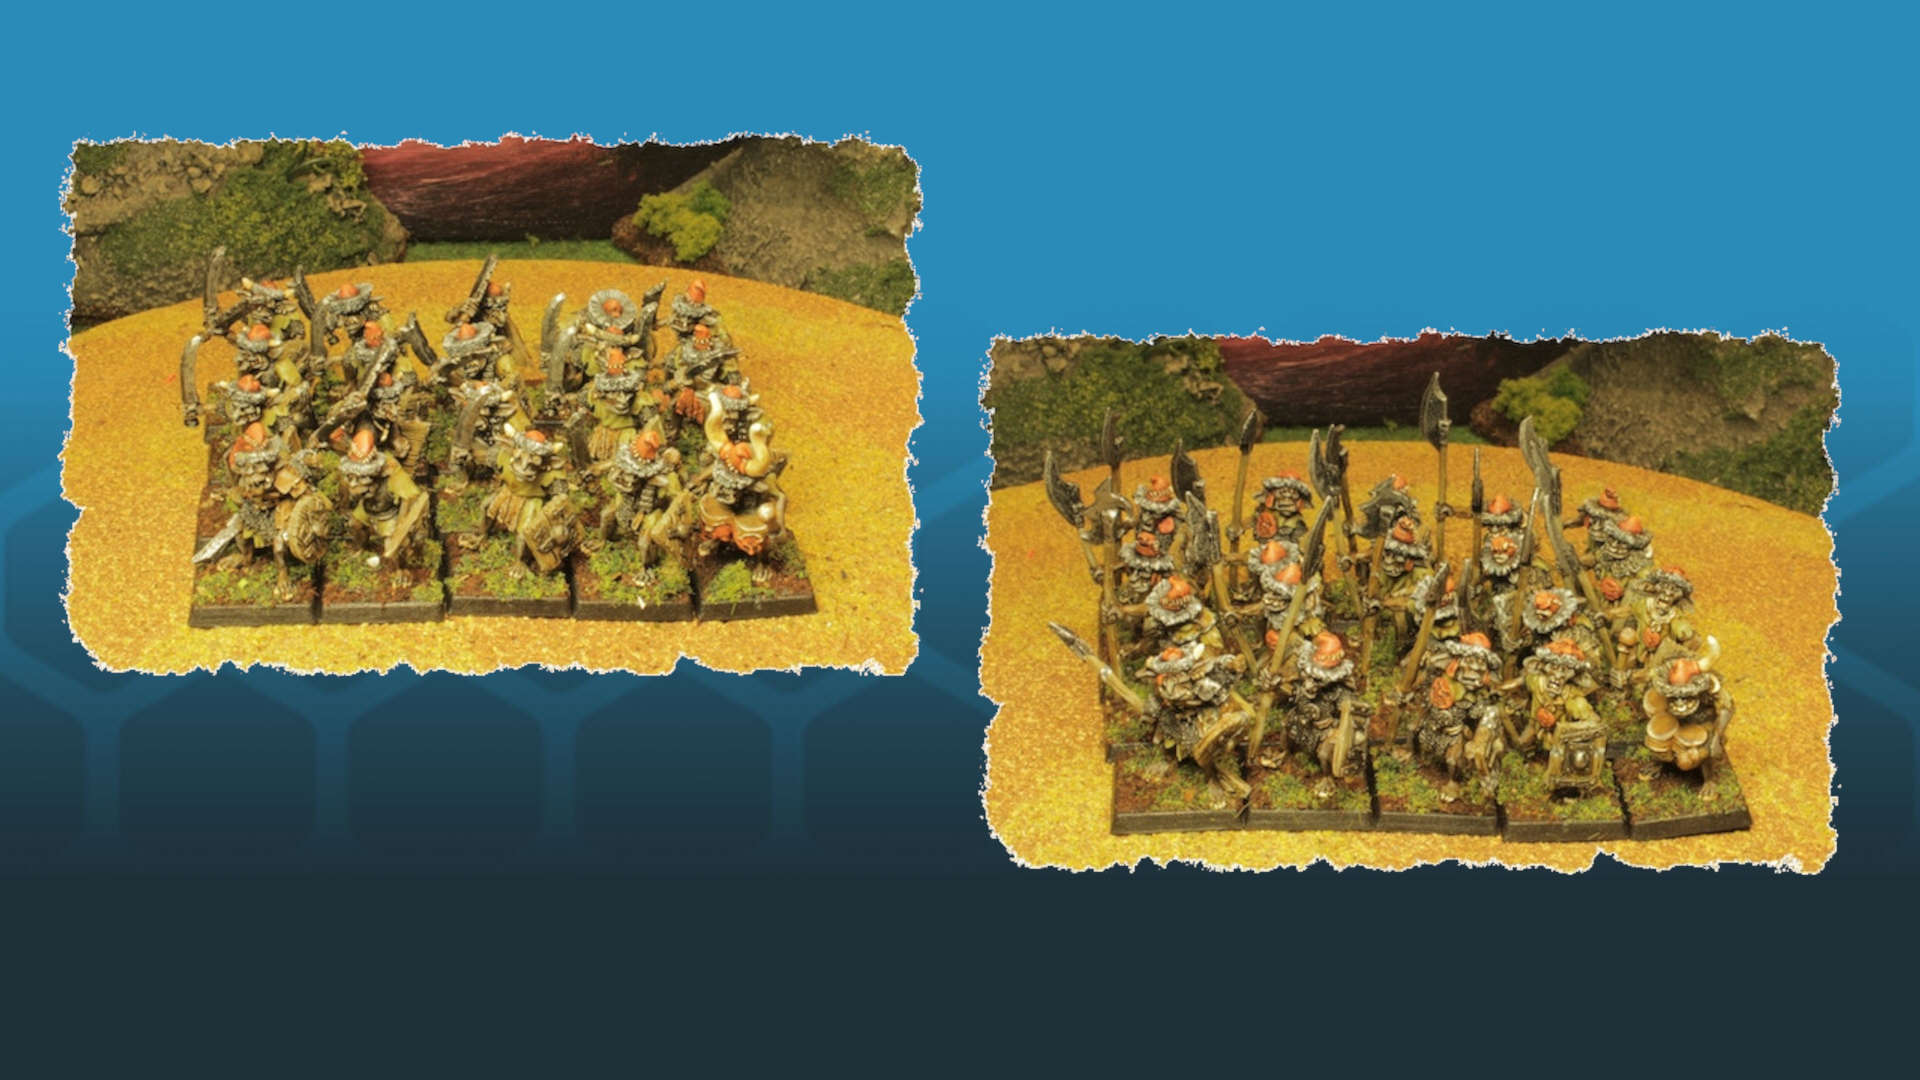 80s Warhammer inspired hobgoblin kickstarter by Oakbound Studio - photographs of two regiments